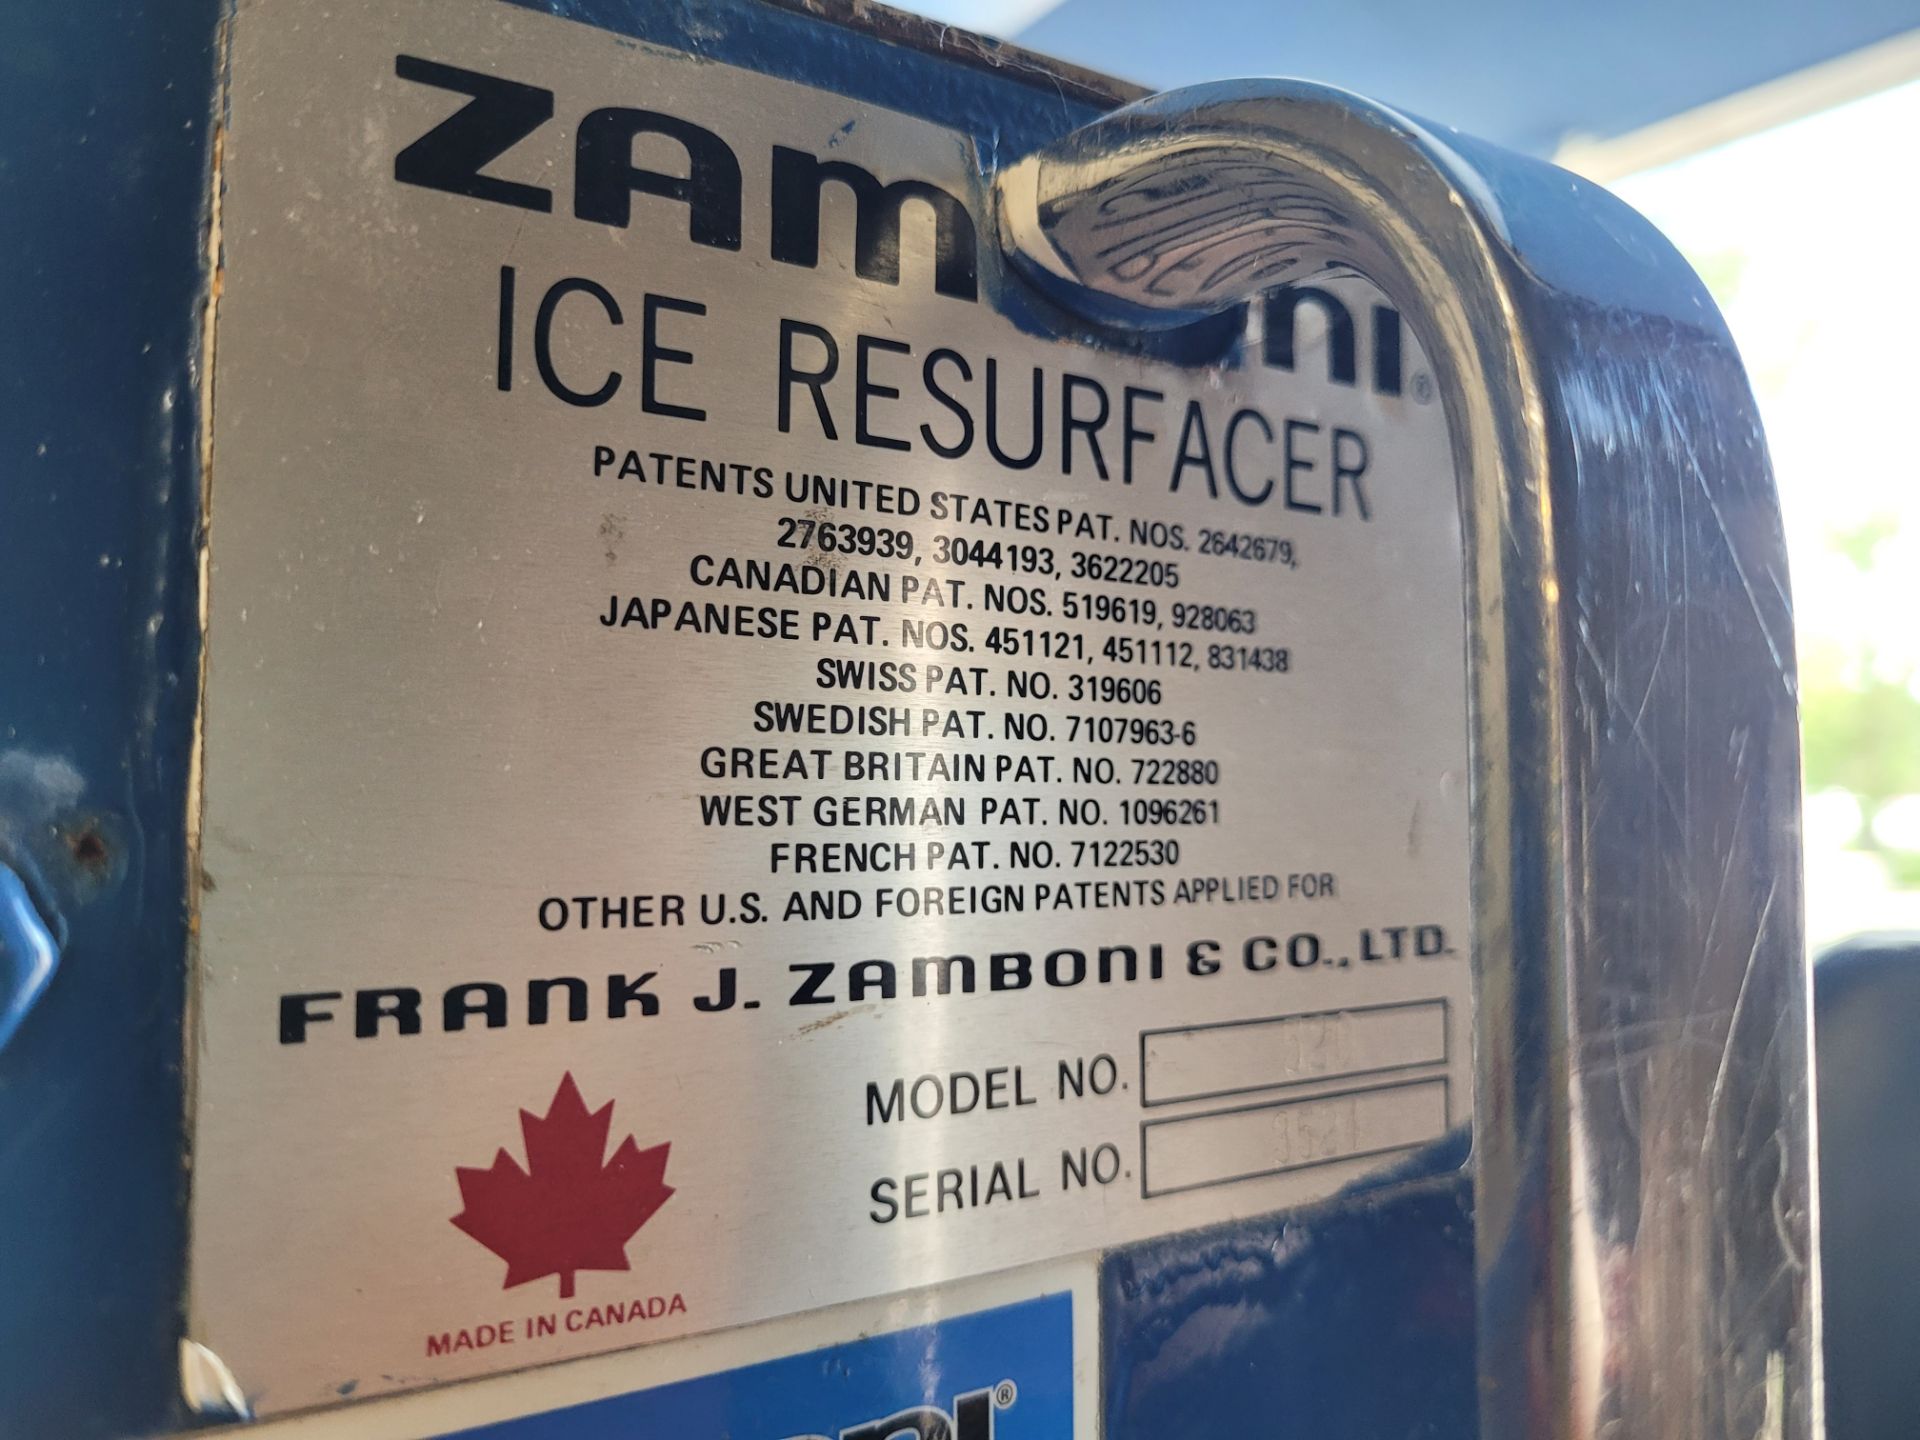 ZAMBONI Ice Resurfacer mod. 520, ser. 3524, propane power - mfg. Frank J. Zamboni & Co. Ltd. Fully f - Image 28 of 36